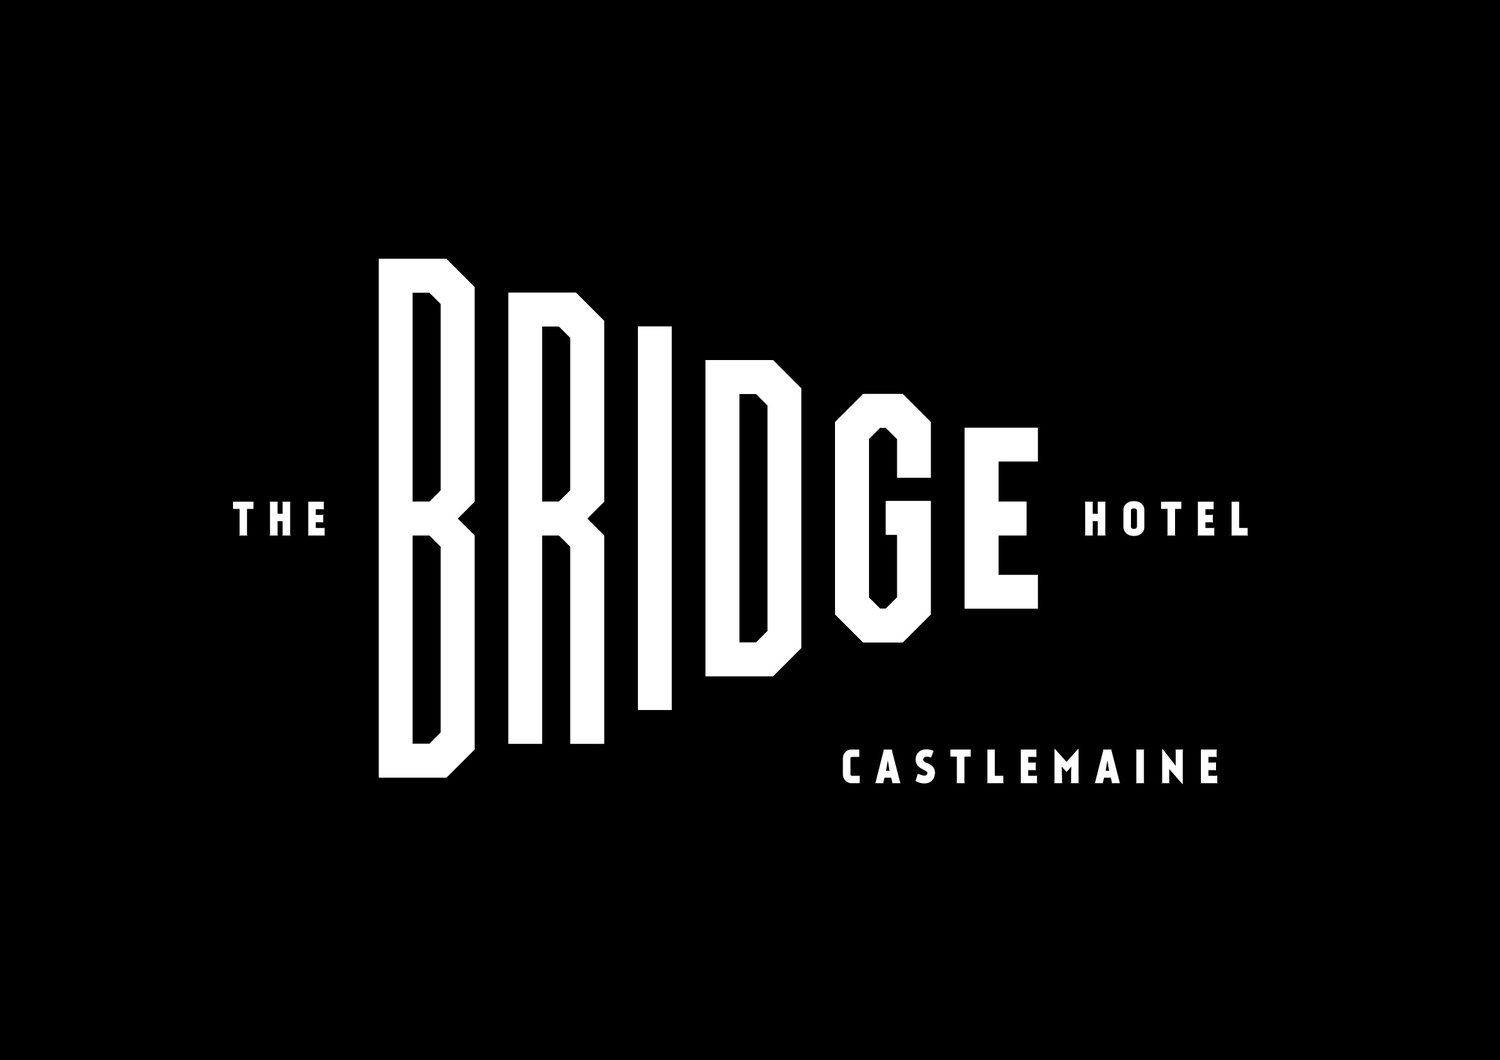 The Bridge Hotel